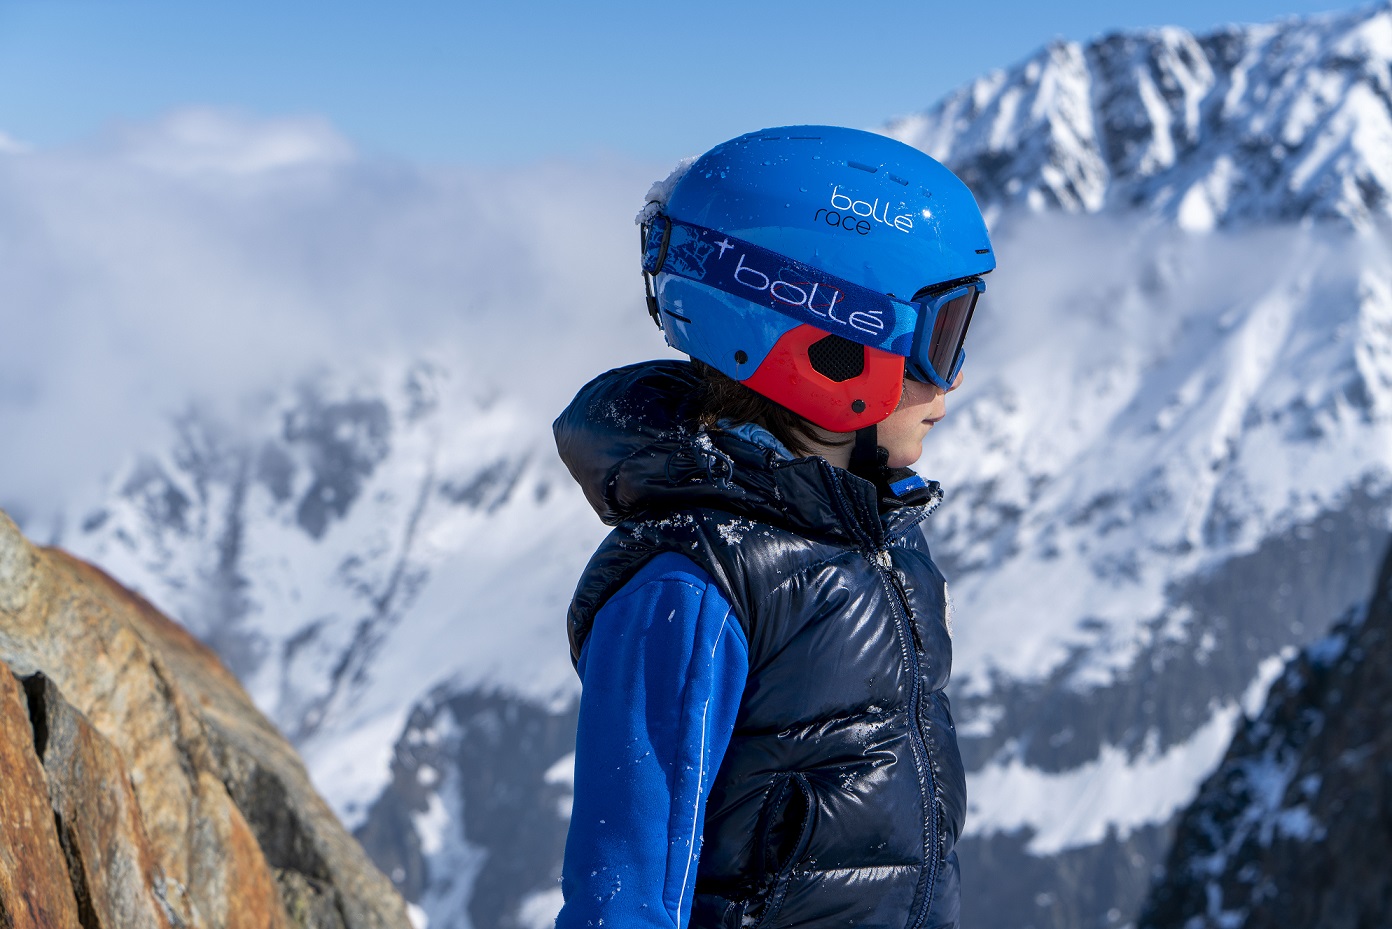 Bollé ROCKET Kids Ski Goggles - UV Protection Snow Goggles | Bollé